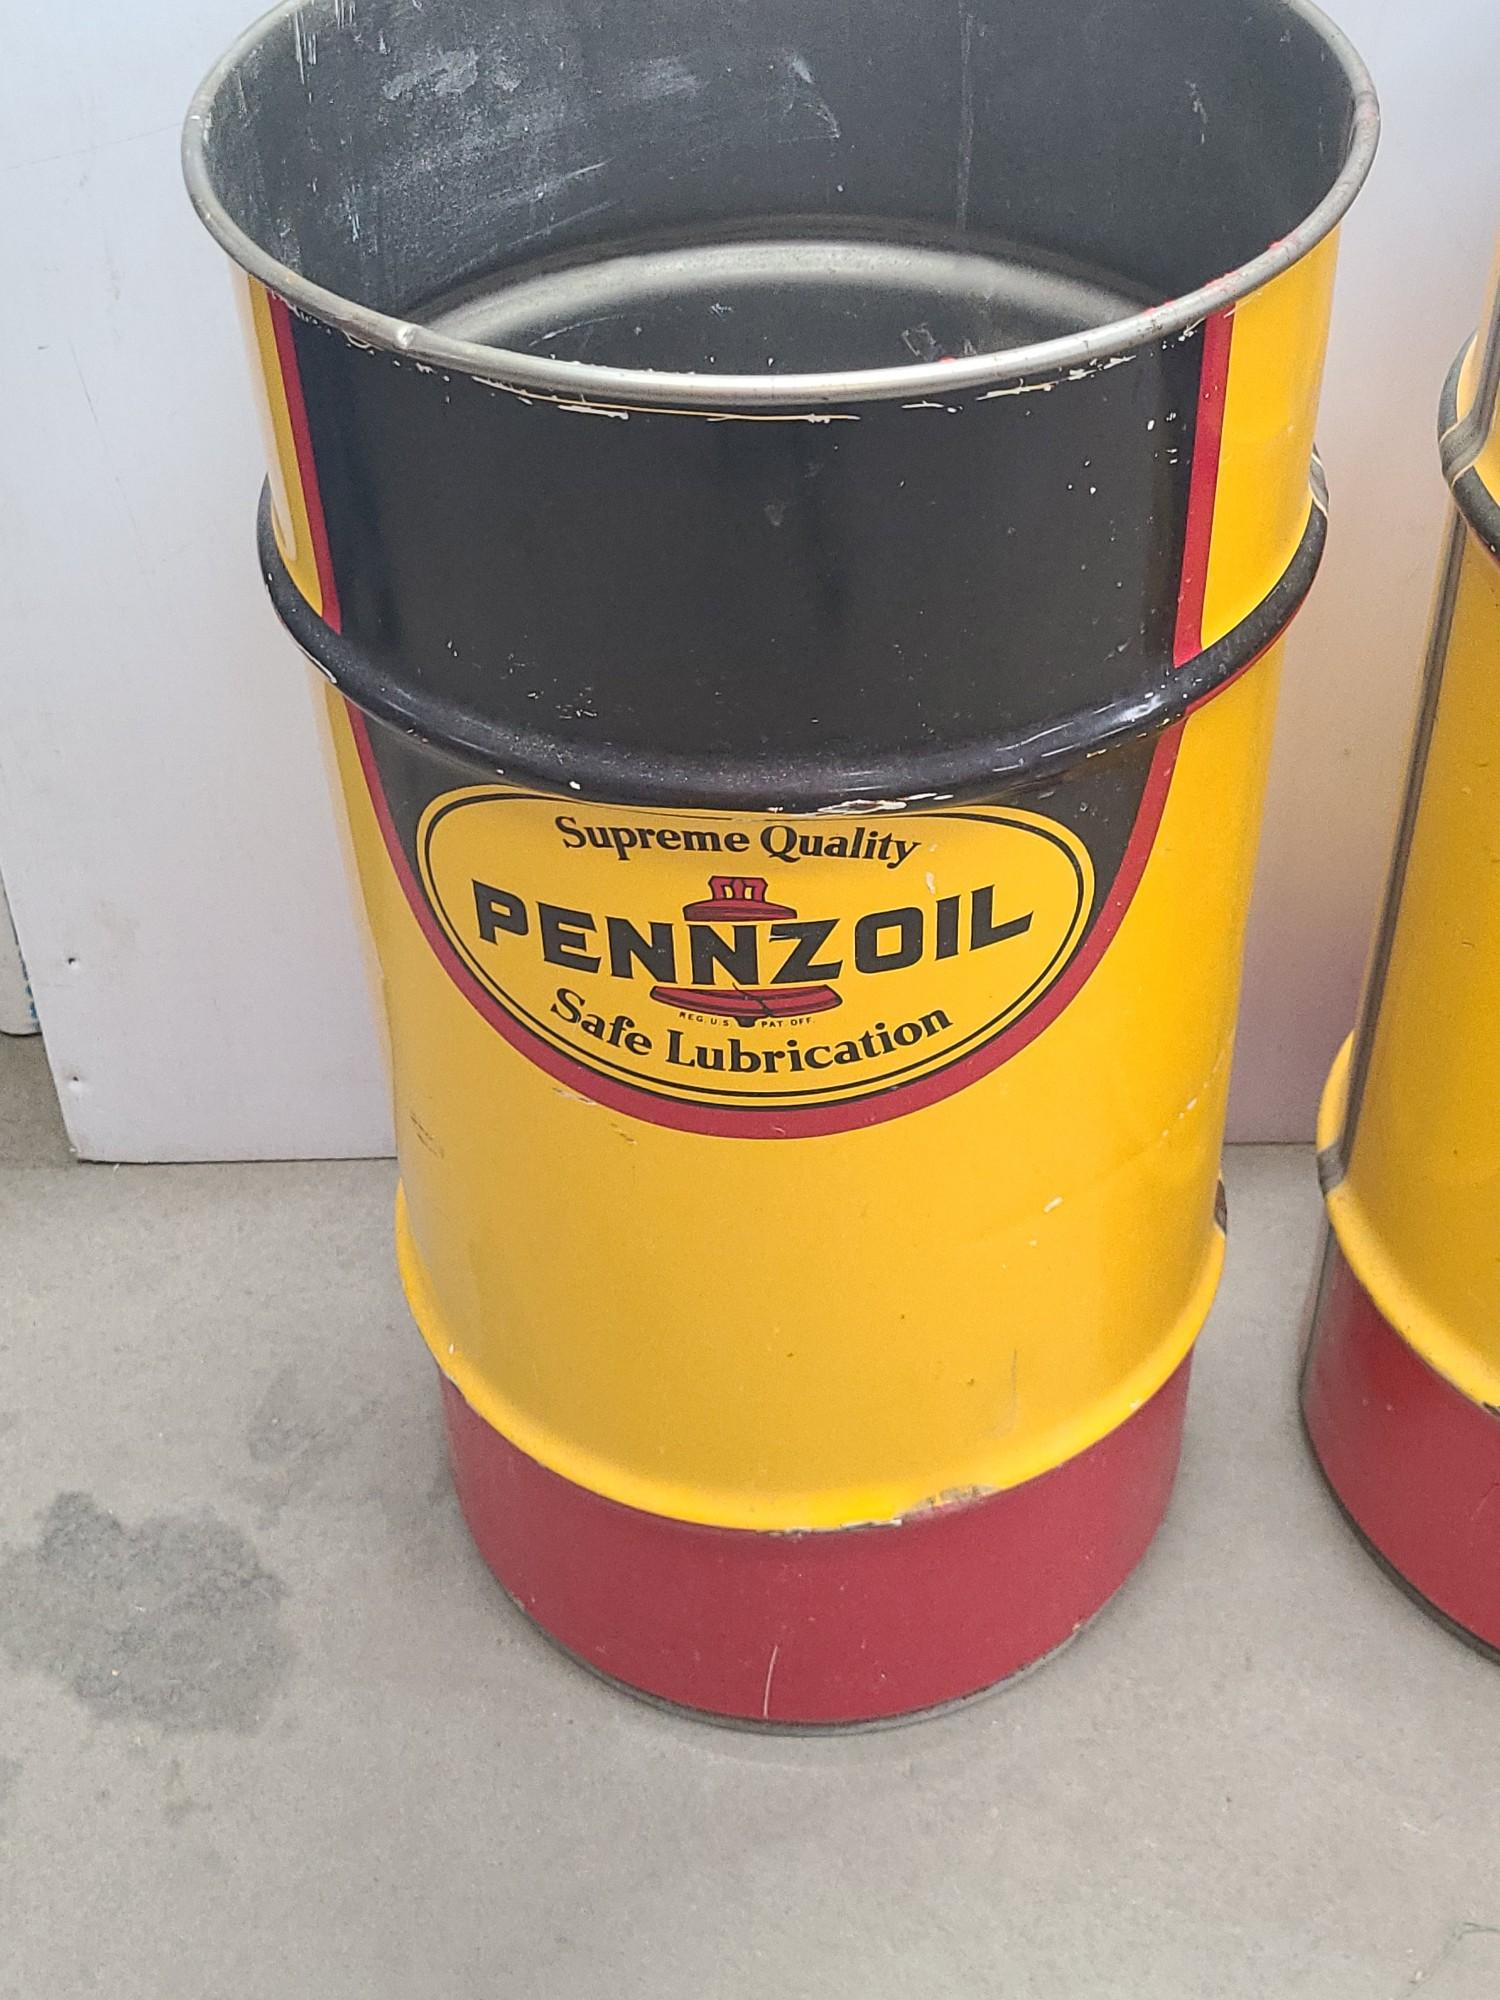 2 Pennzoil Oil Drum